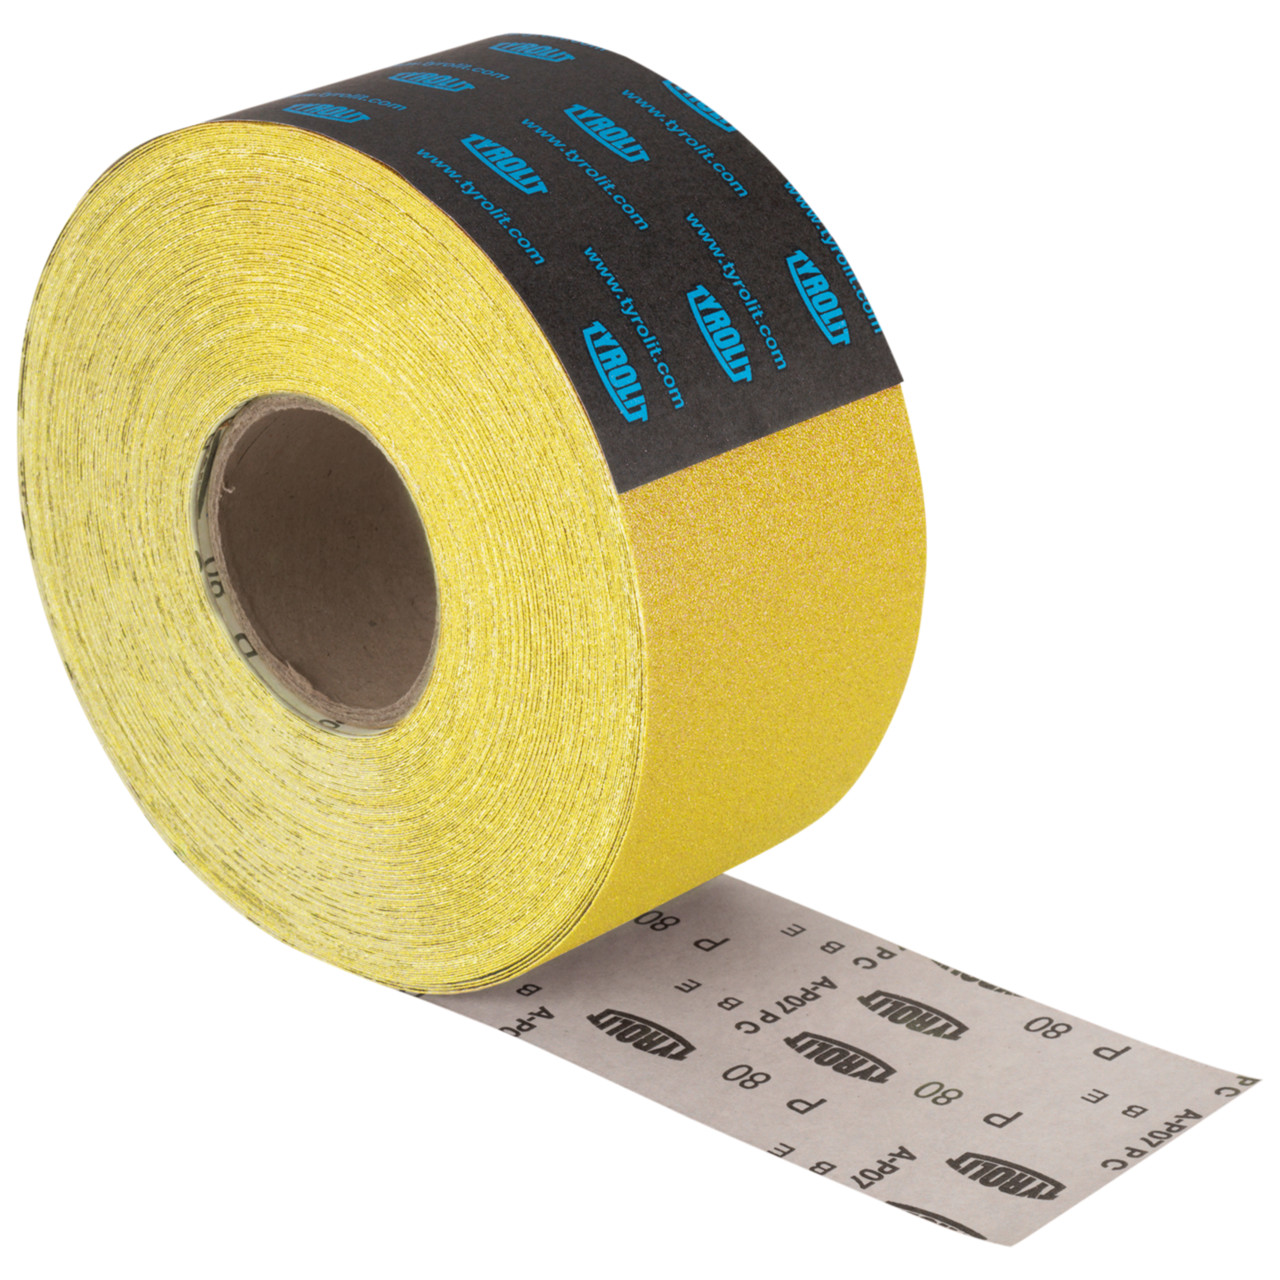 TYROLIT A-P21 D Paper rolls TxH 115x50 For plastic, wood, paint and varnish, P240, shape: ROLL, Art. 34230643